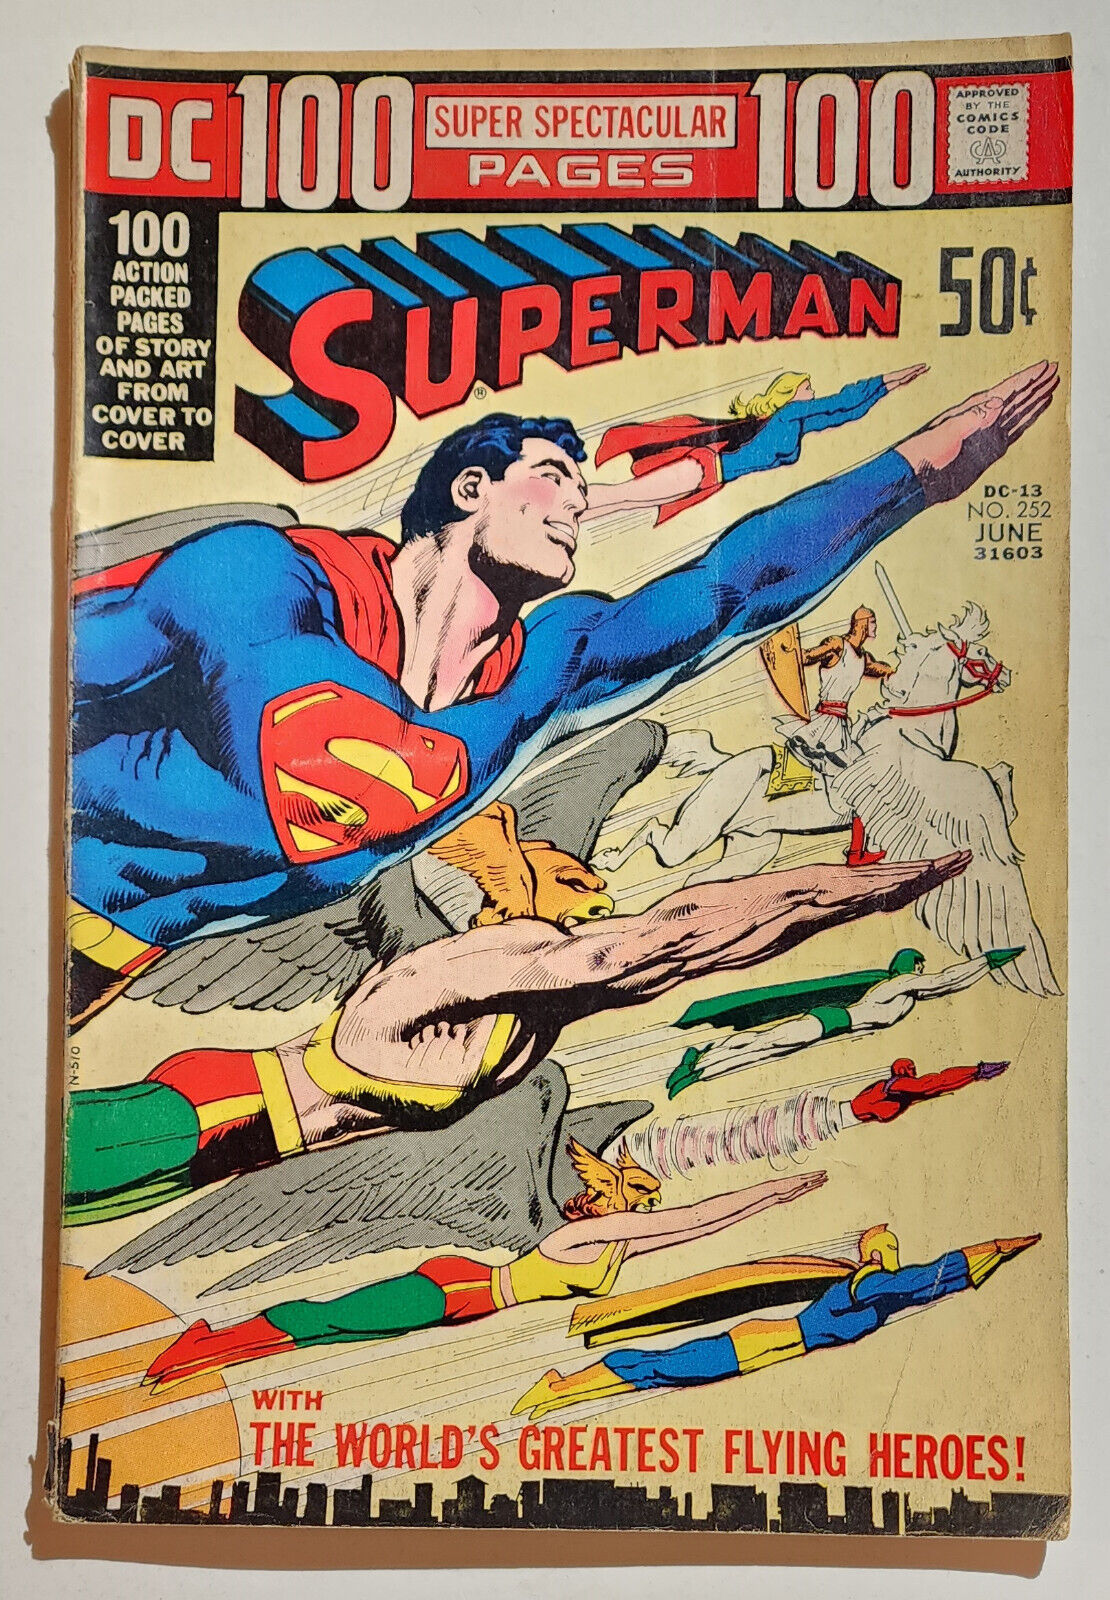 SUPERMAN #252 1972 Bronze Age Classic NEAL ADAMS Cover - I combine shipping